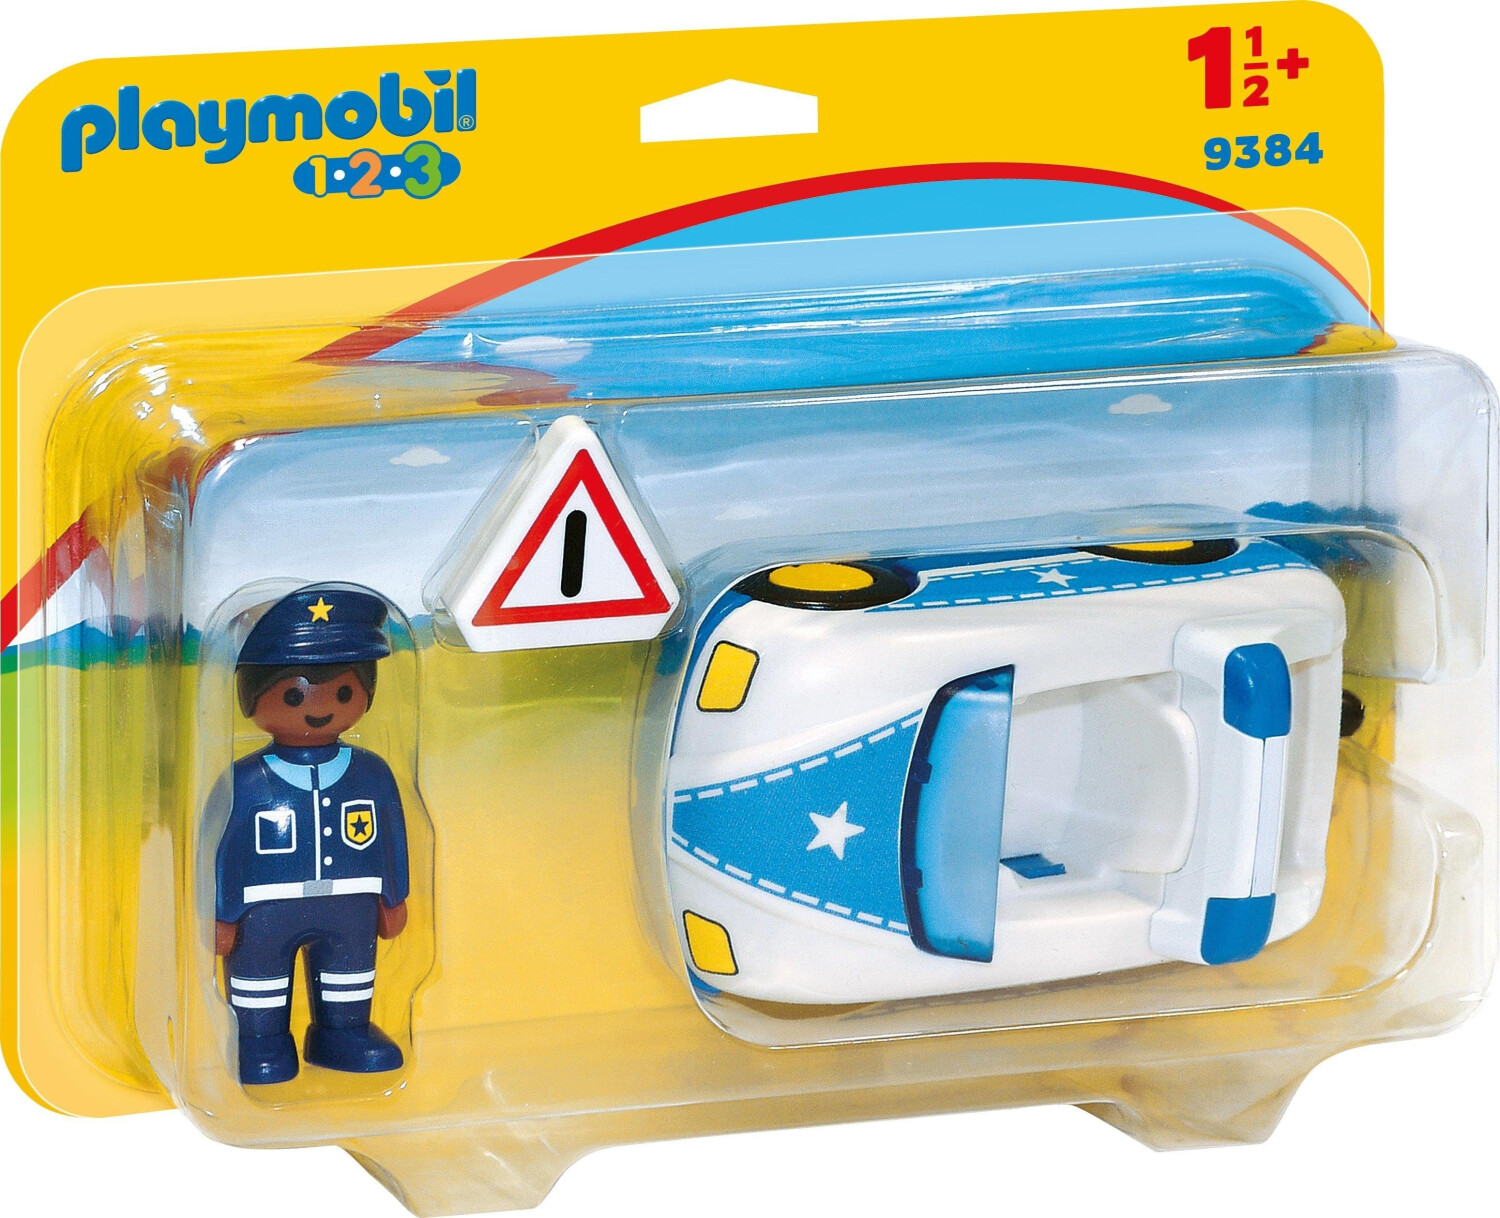 Playmobil 12.3 - Police Car (9384)